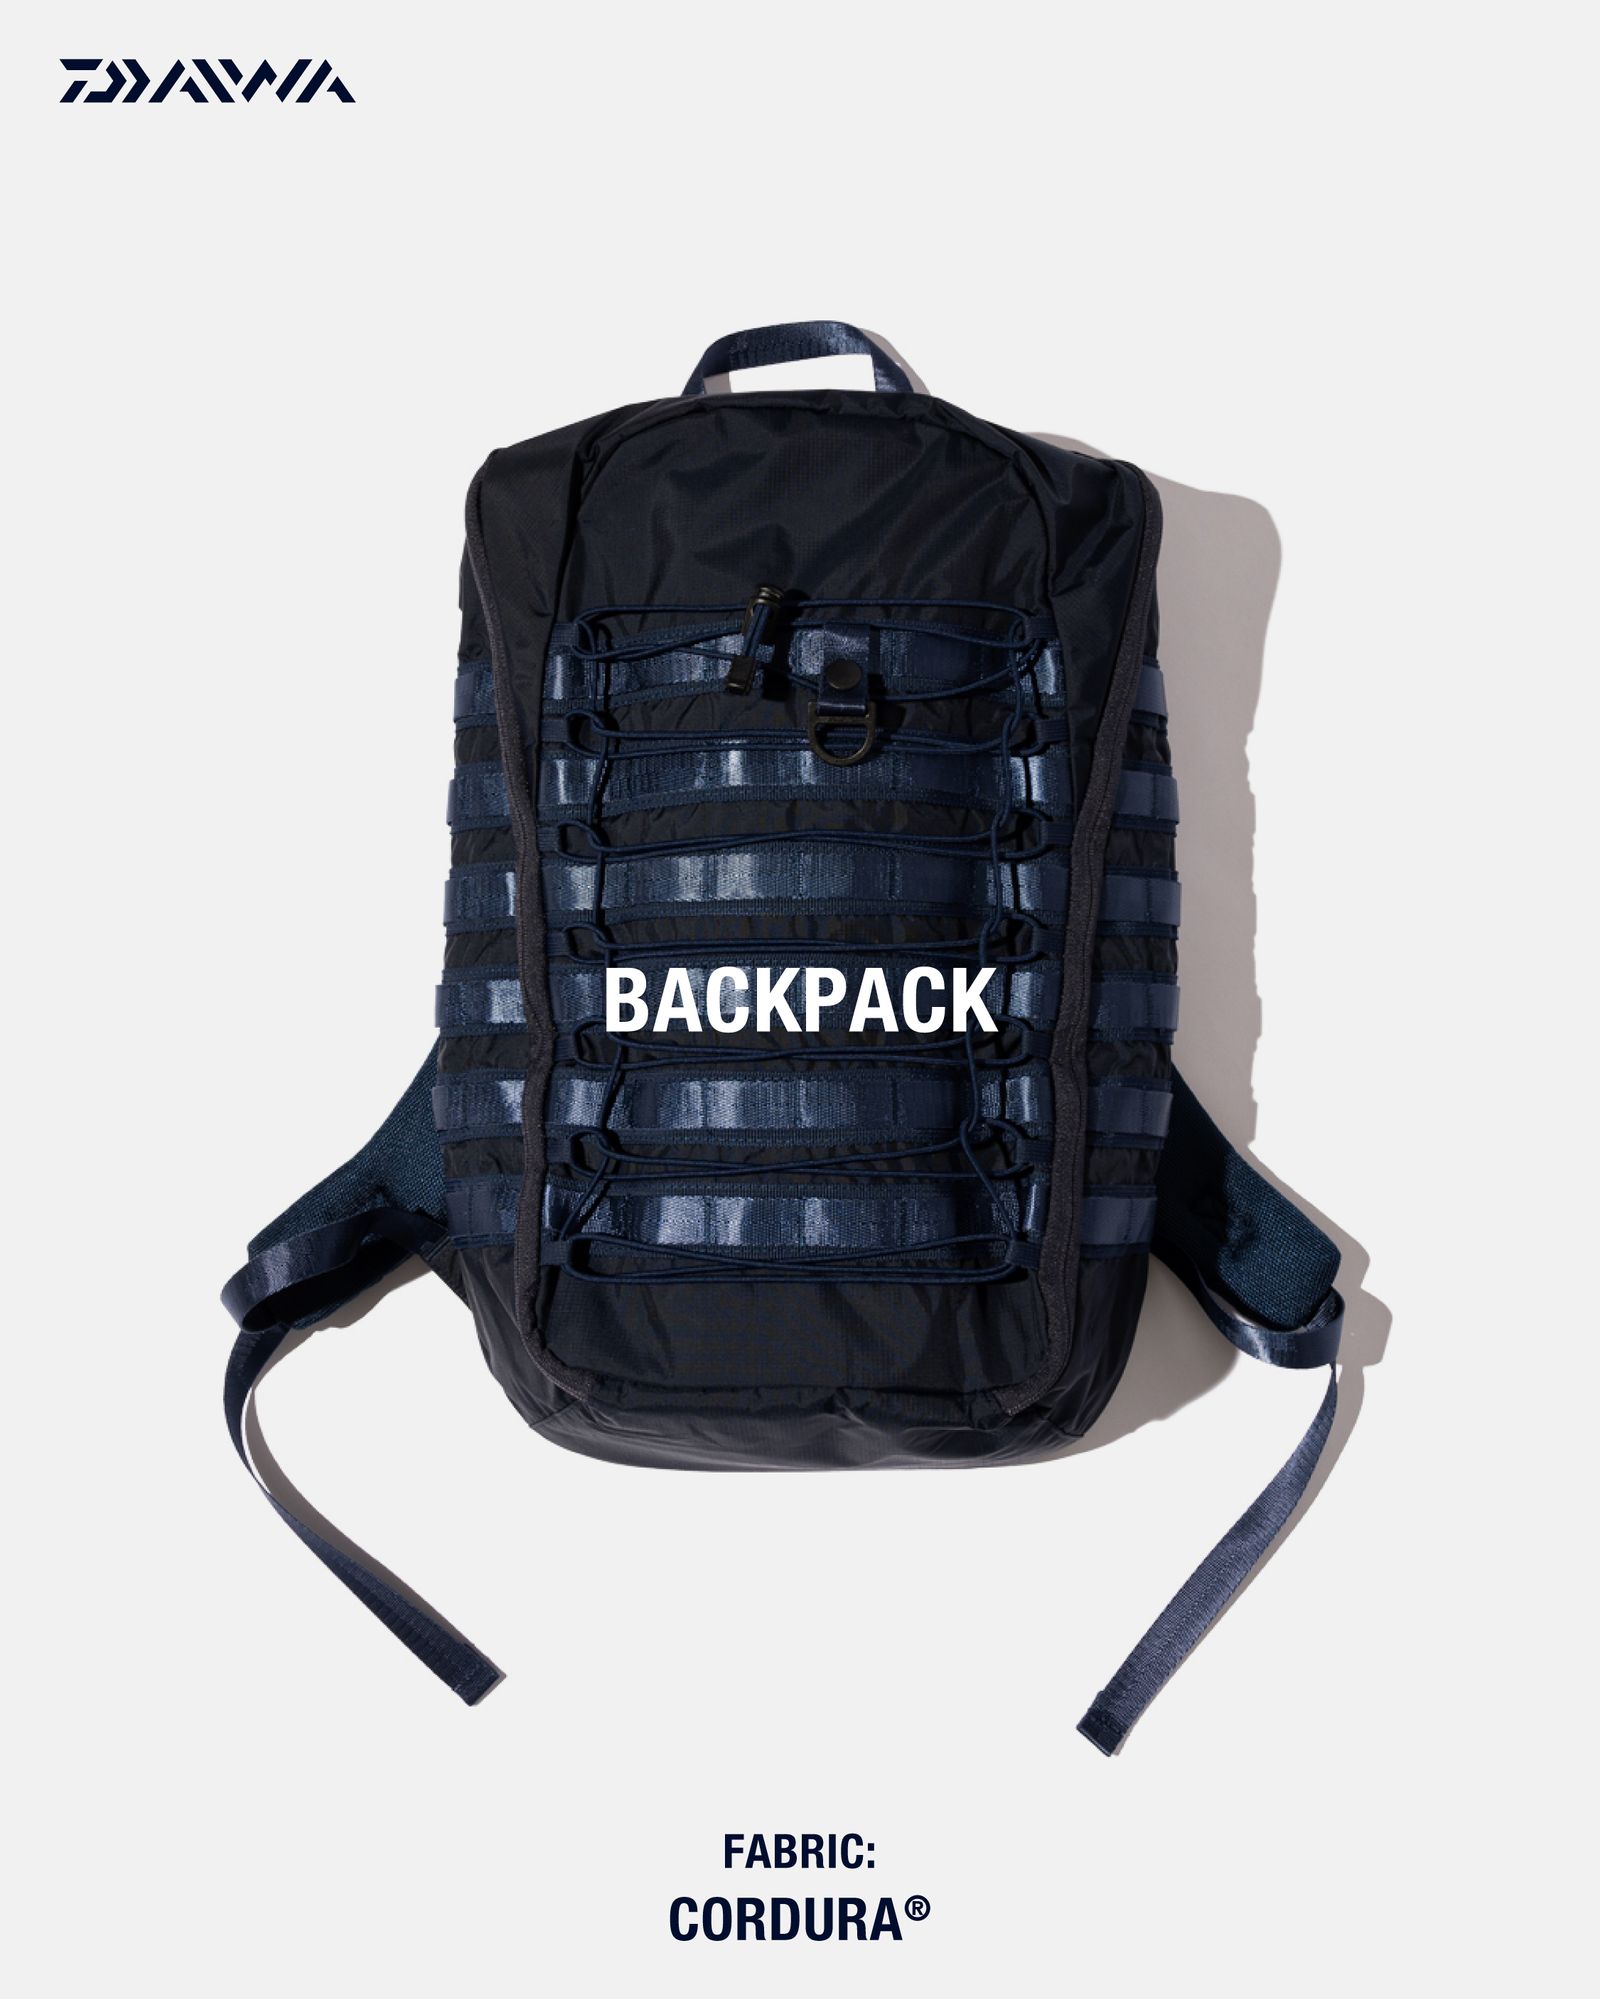 DAIWA LIFESTYLE  backpack ダイワ バックパック 美品